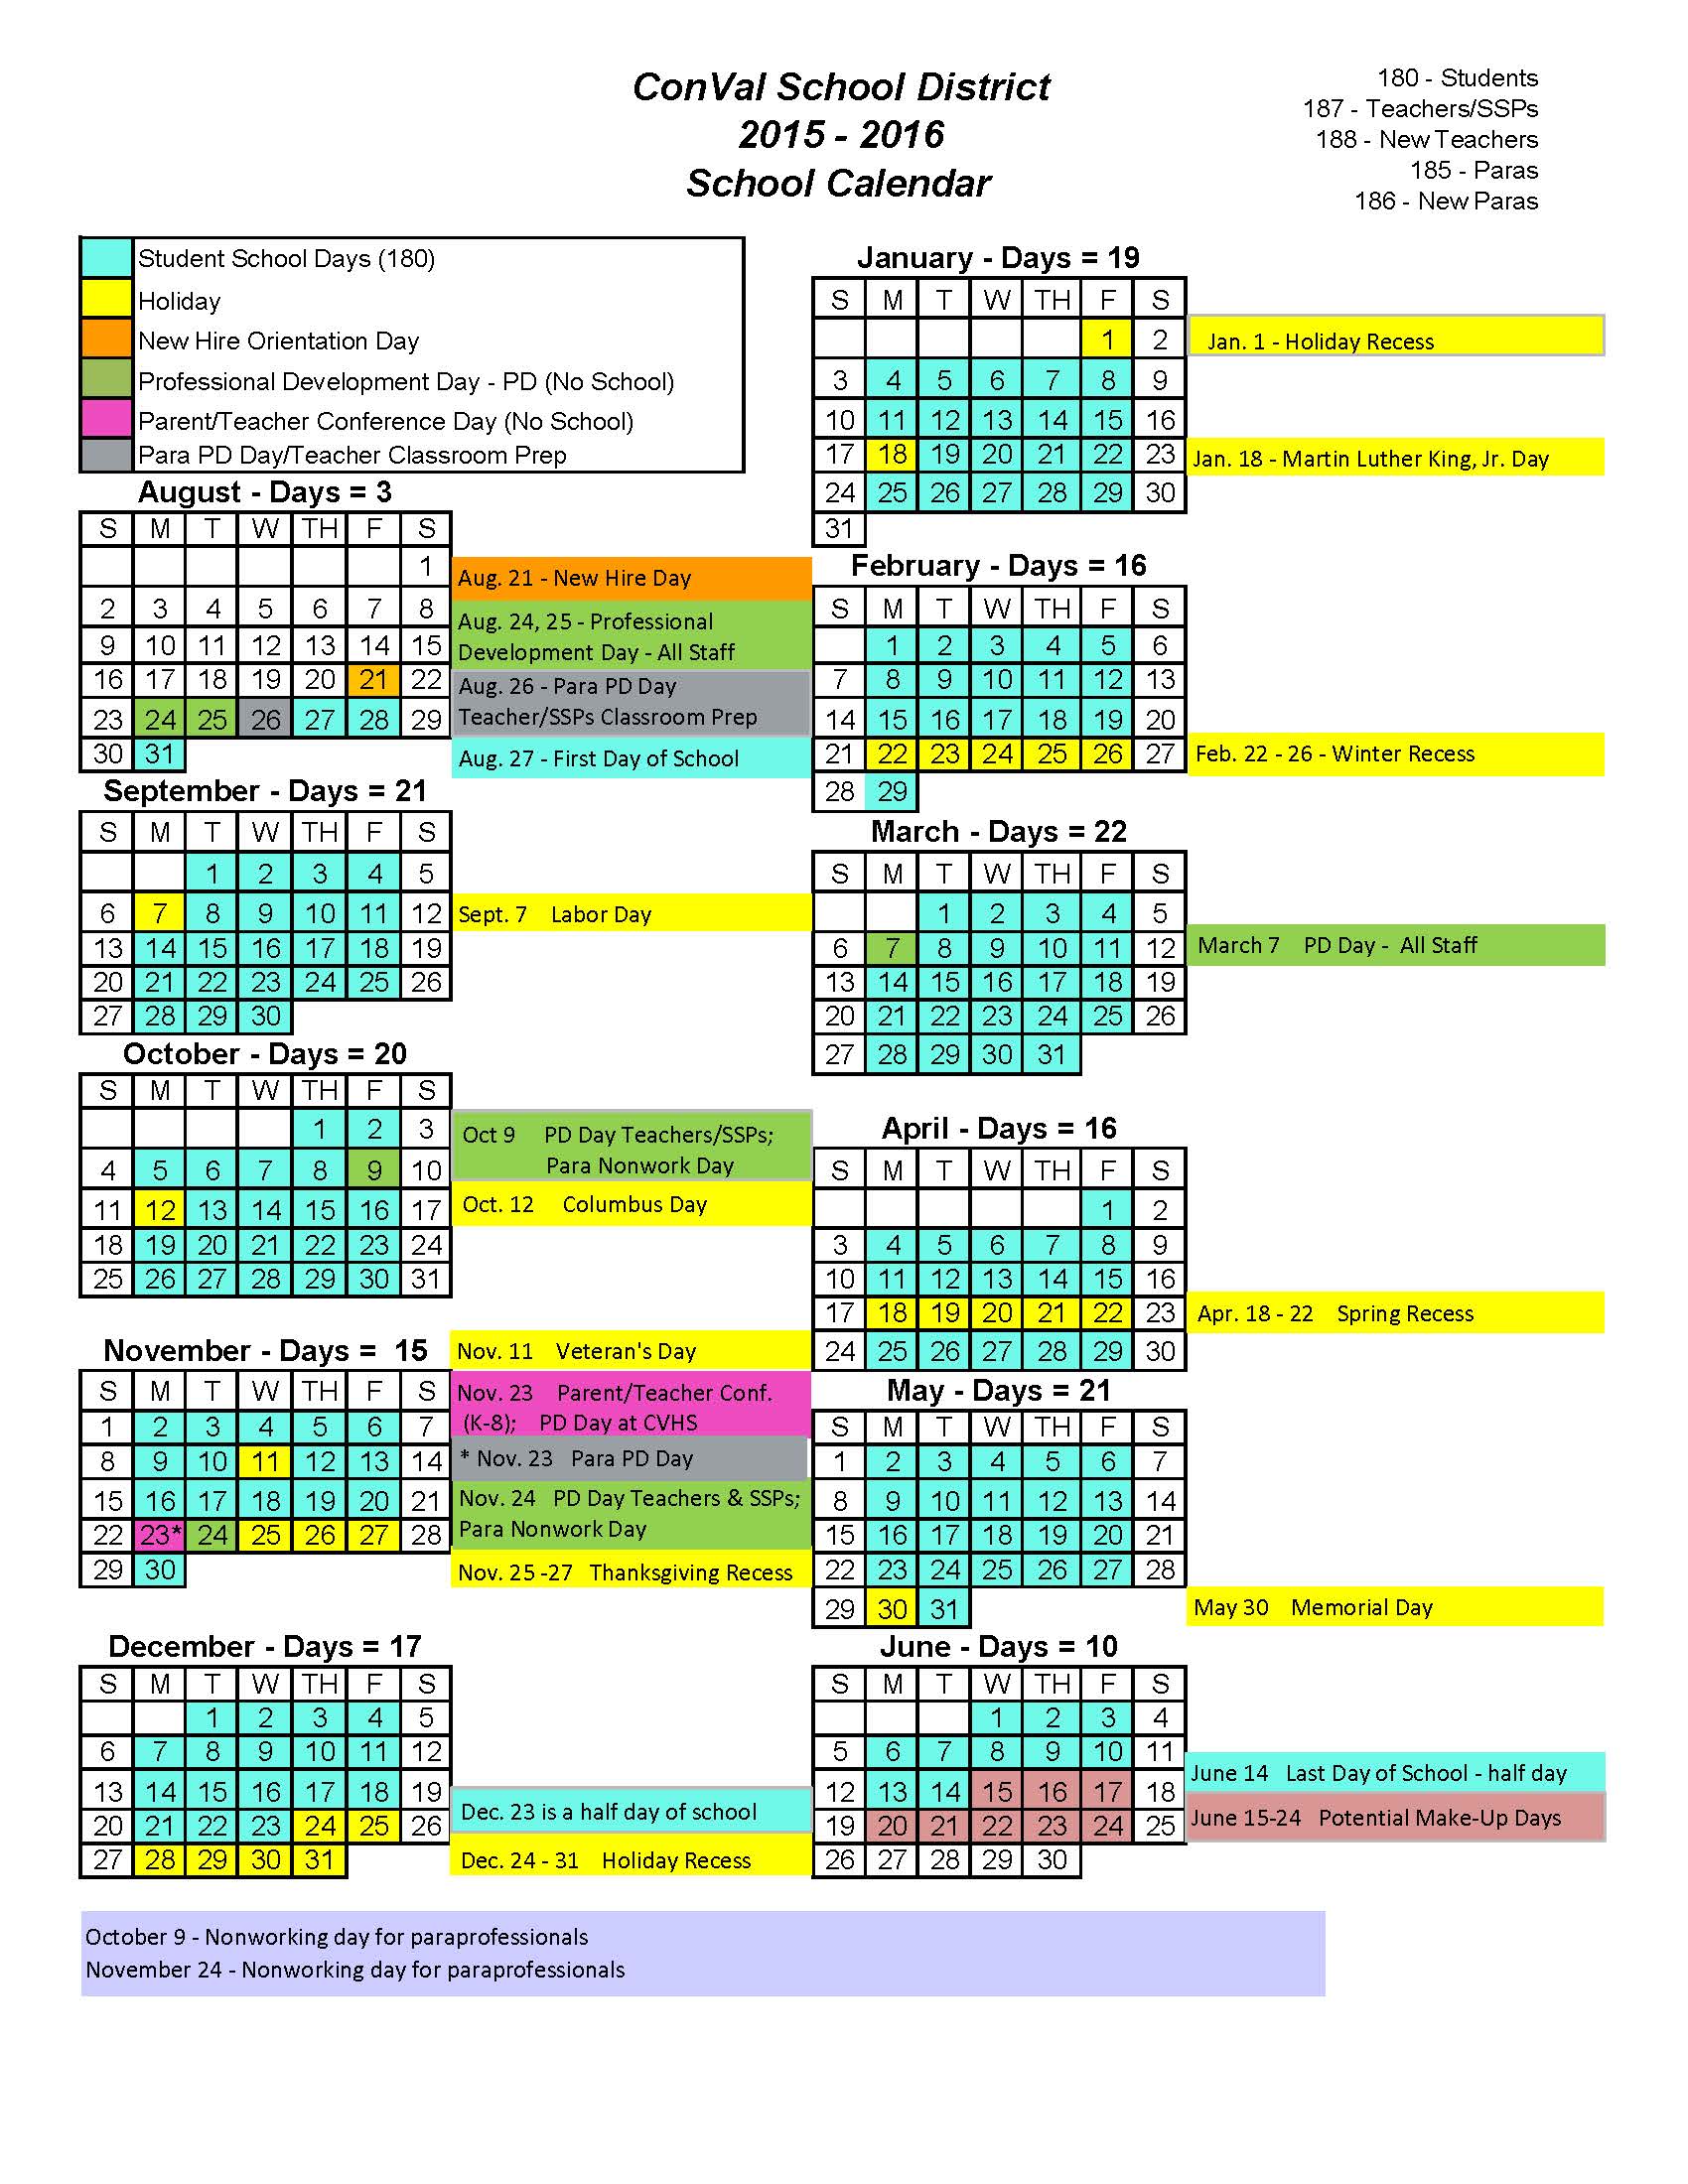 1516 School Calendar Peterborough Elementary School